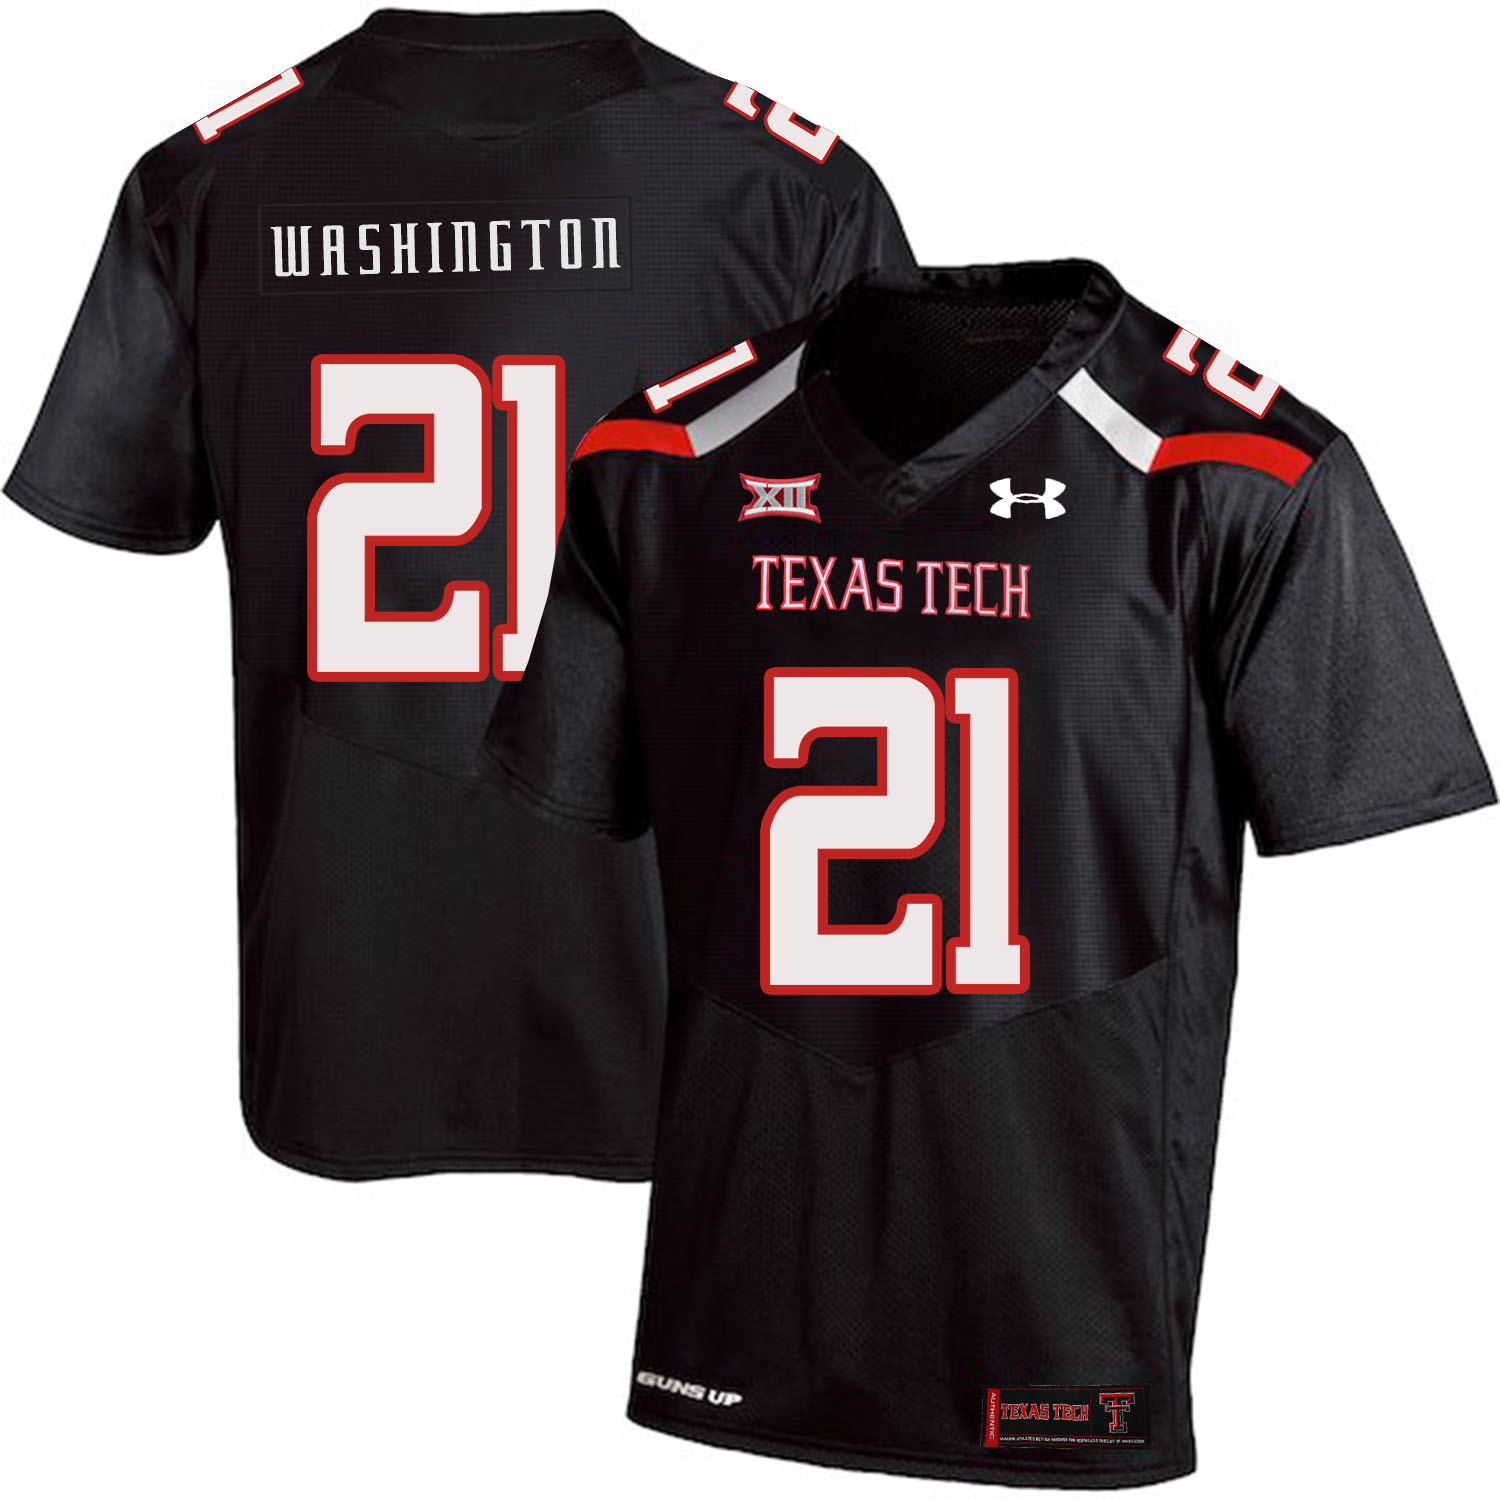 Texas Tech Red Raiders 21 DeAndre Washington Black College Football Jersey